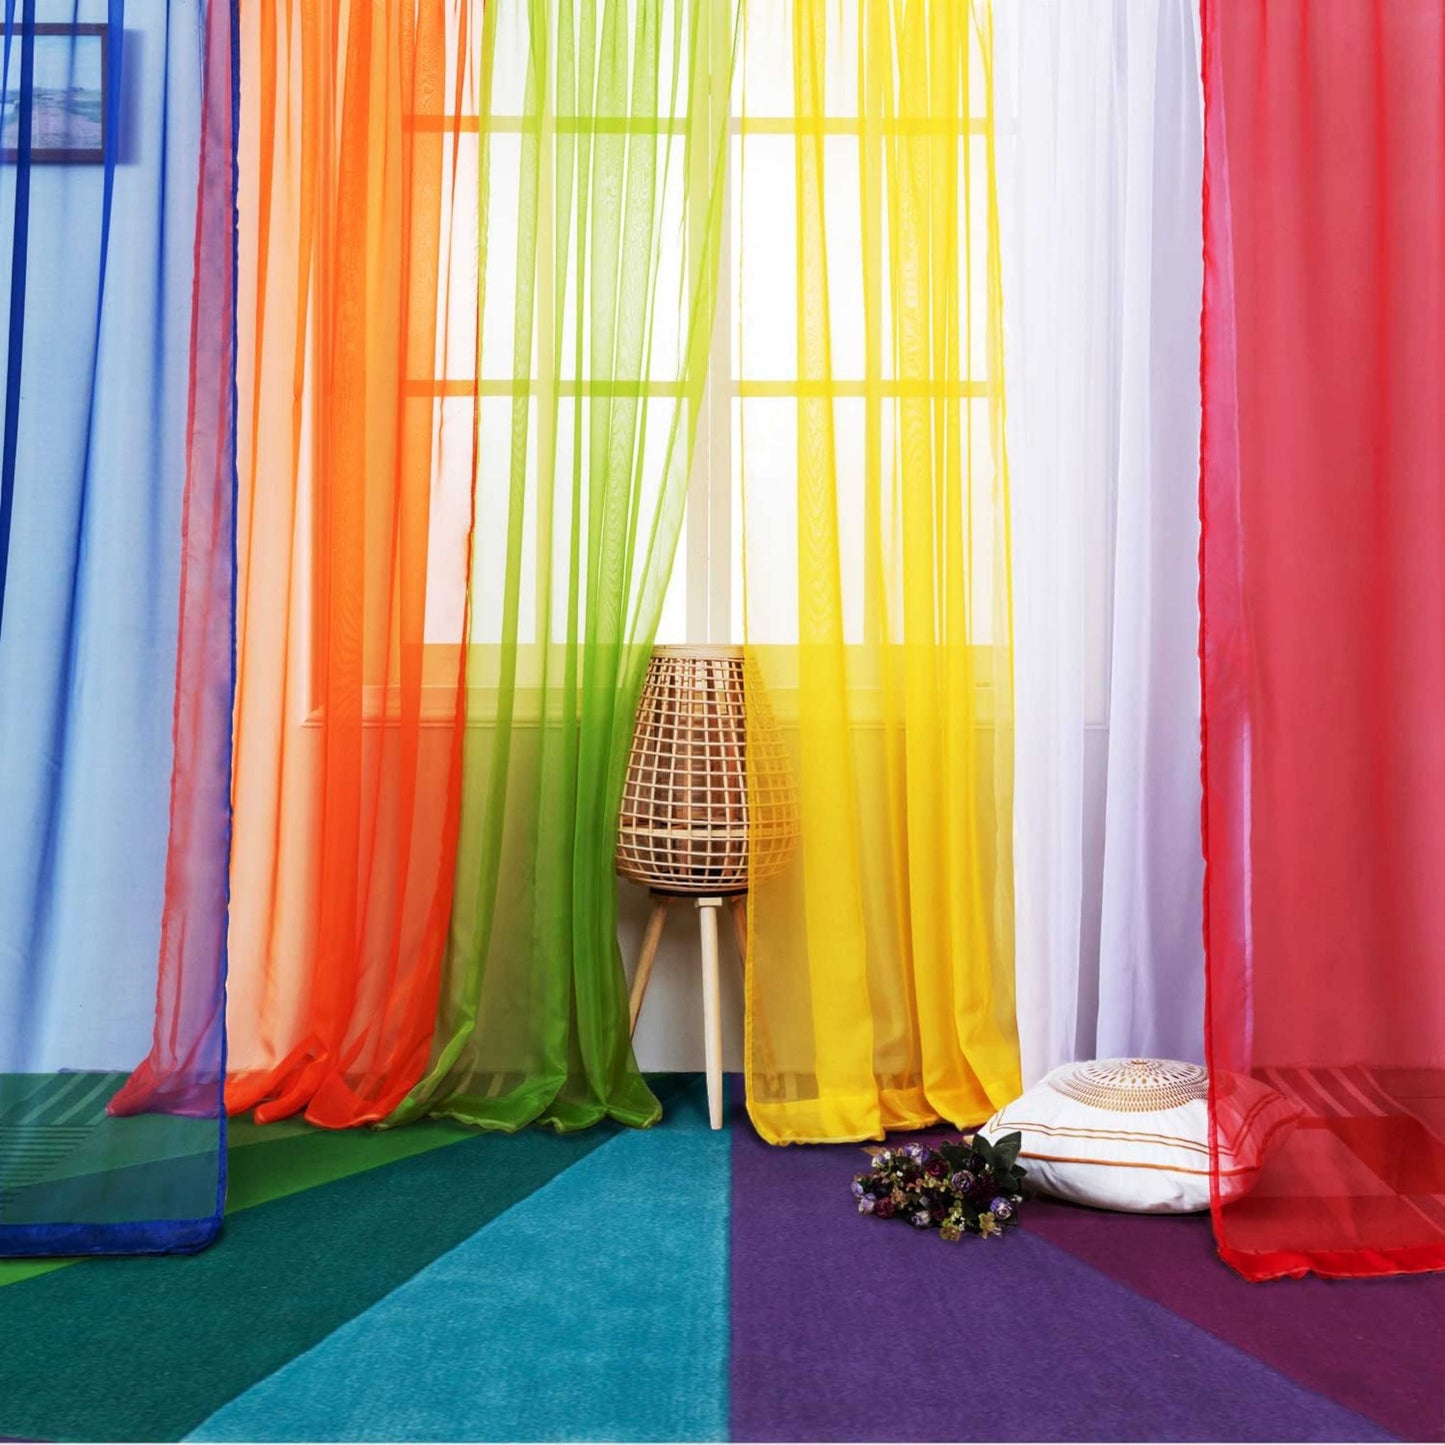 Vibrant Organza Fabric - 10mtr Bright Net in Multiple Colors for Decor & Crafts